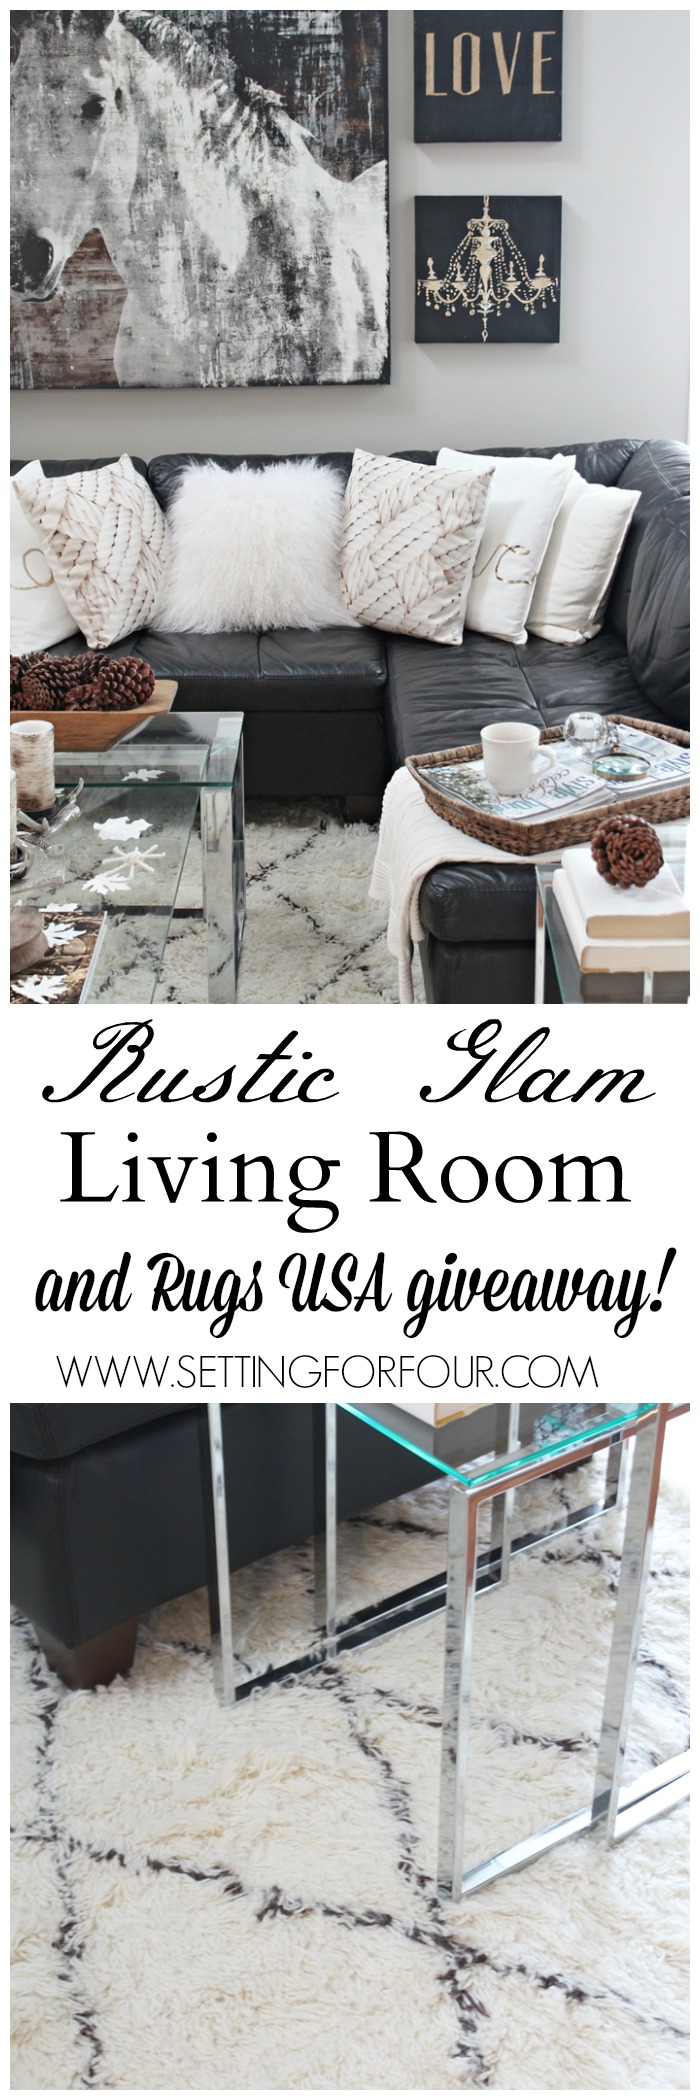 rustic-glam-living-room-decor-tips-2jpg